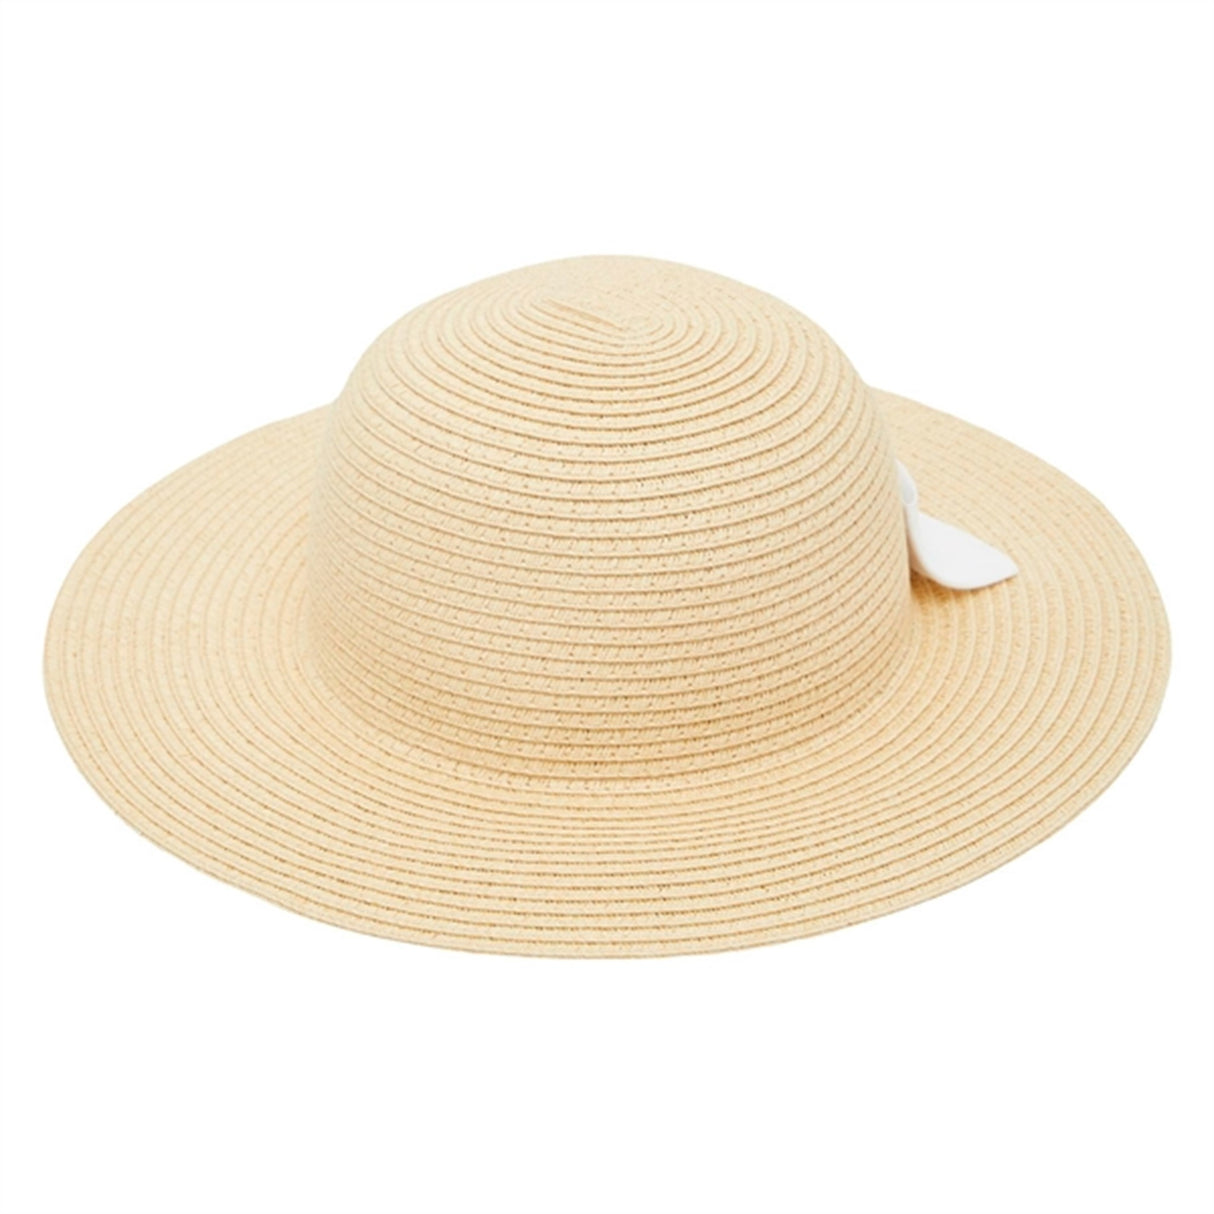 Name it White Alyssum Femke Straw Hat